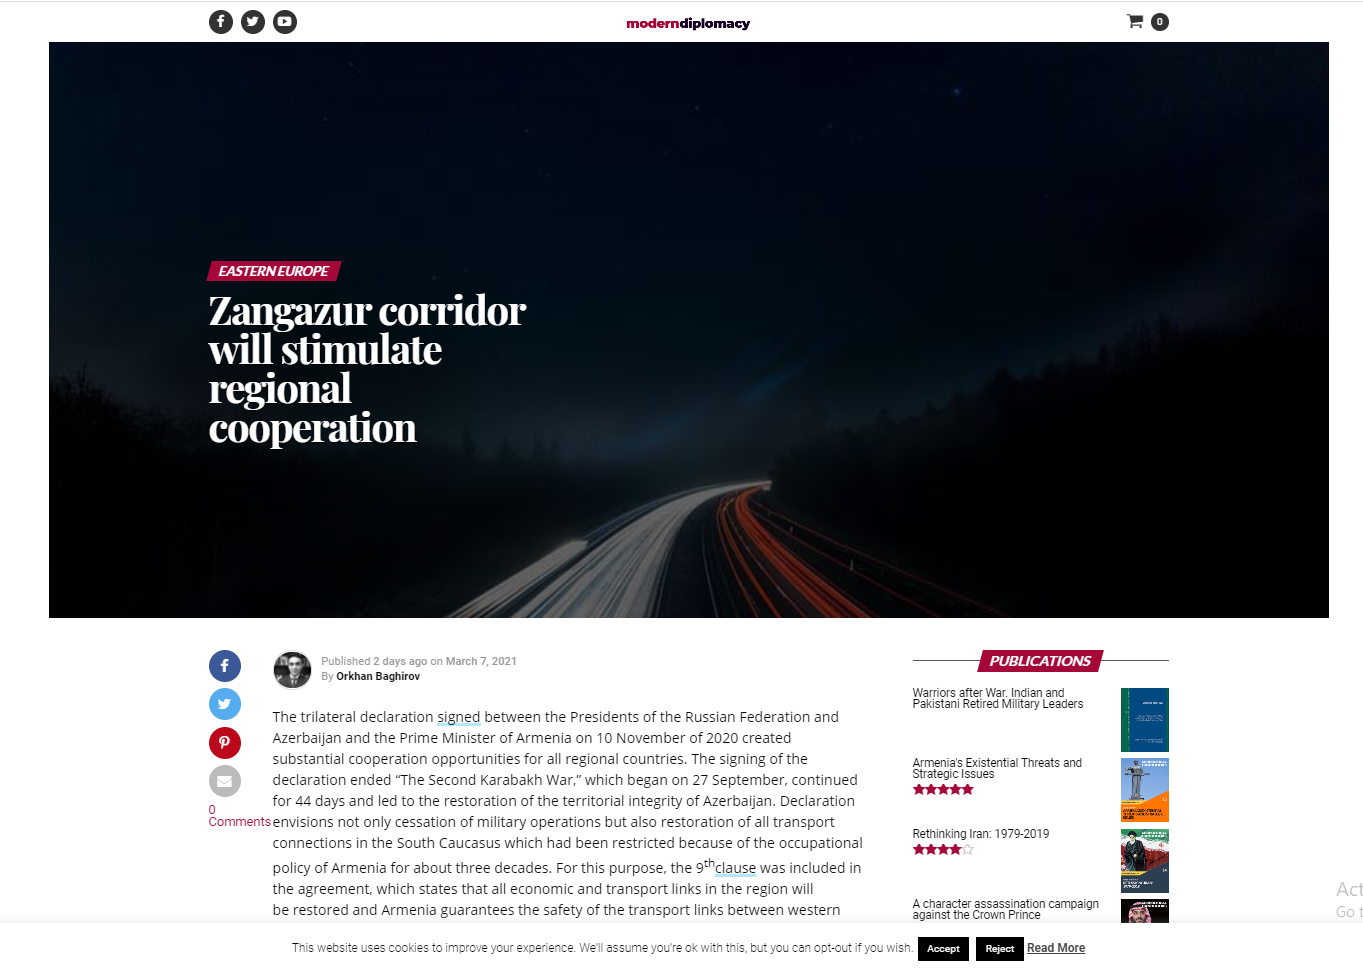 Zangazur corridor will stimulate regional cooperation